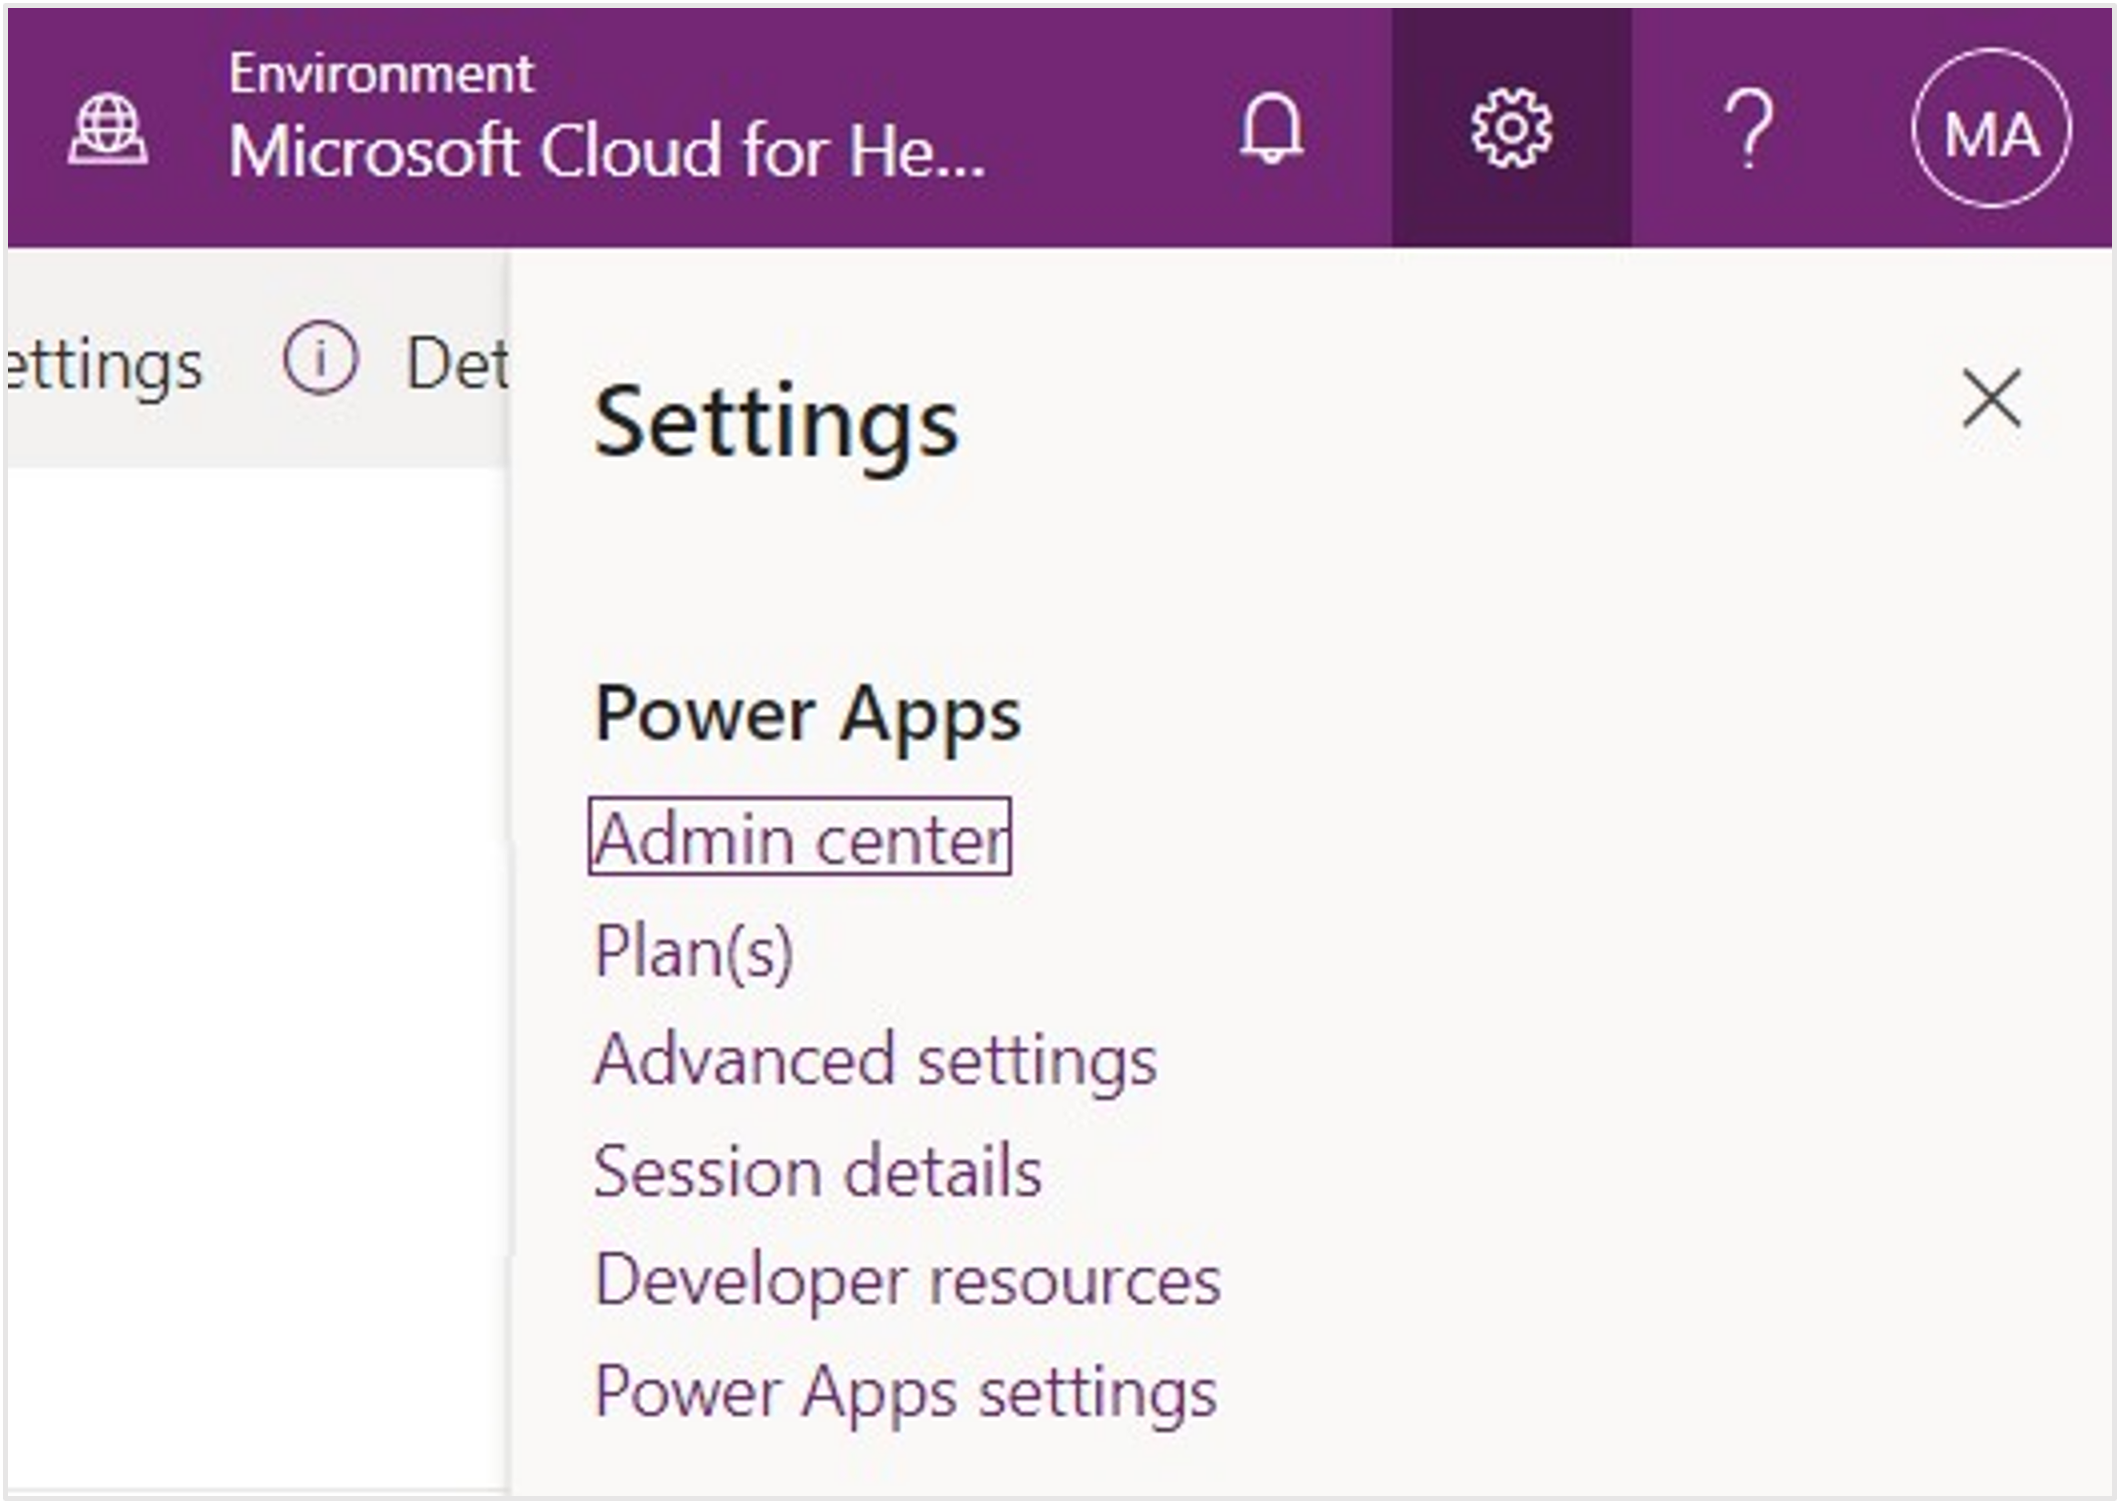 Screenshot of the Environment Settings menu with Advance Settings selected.